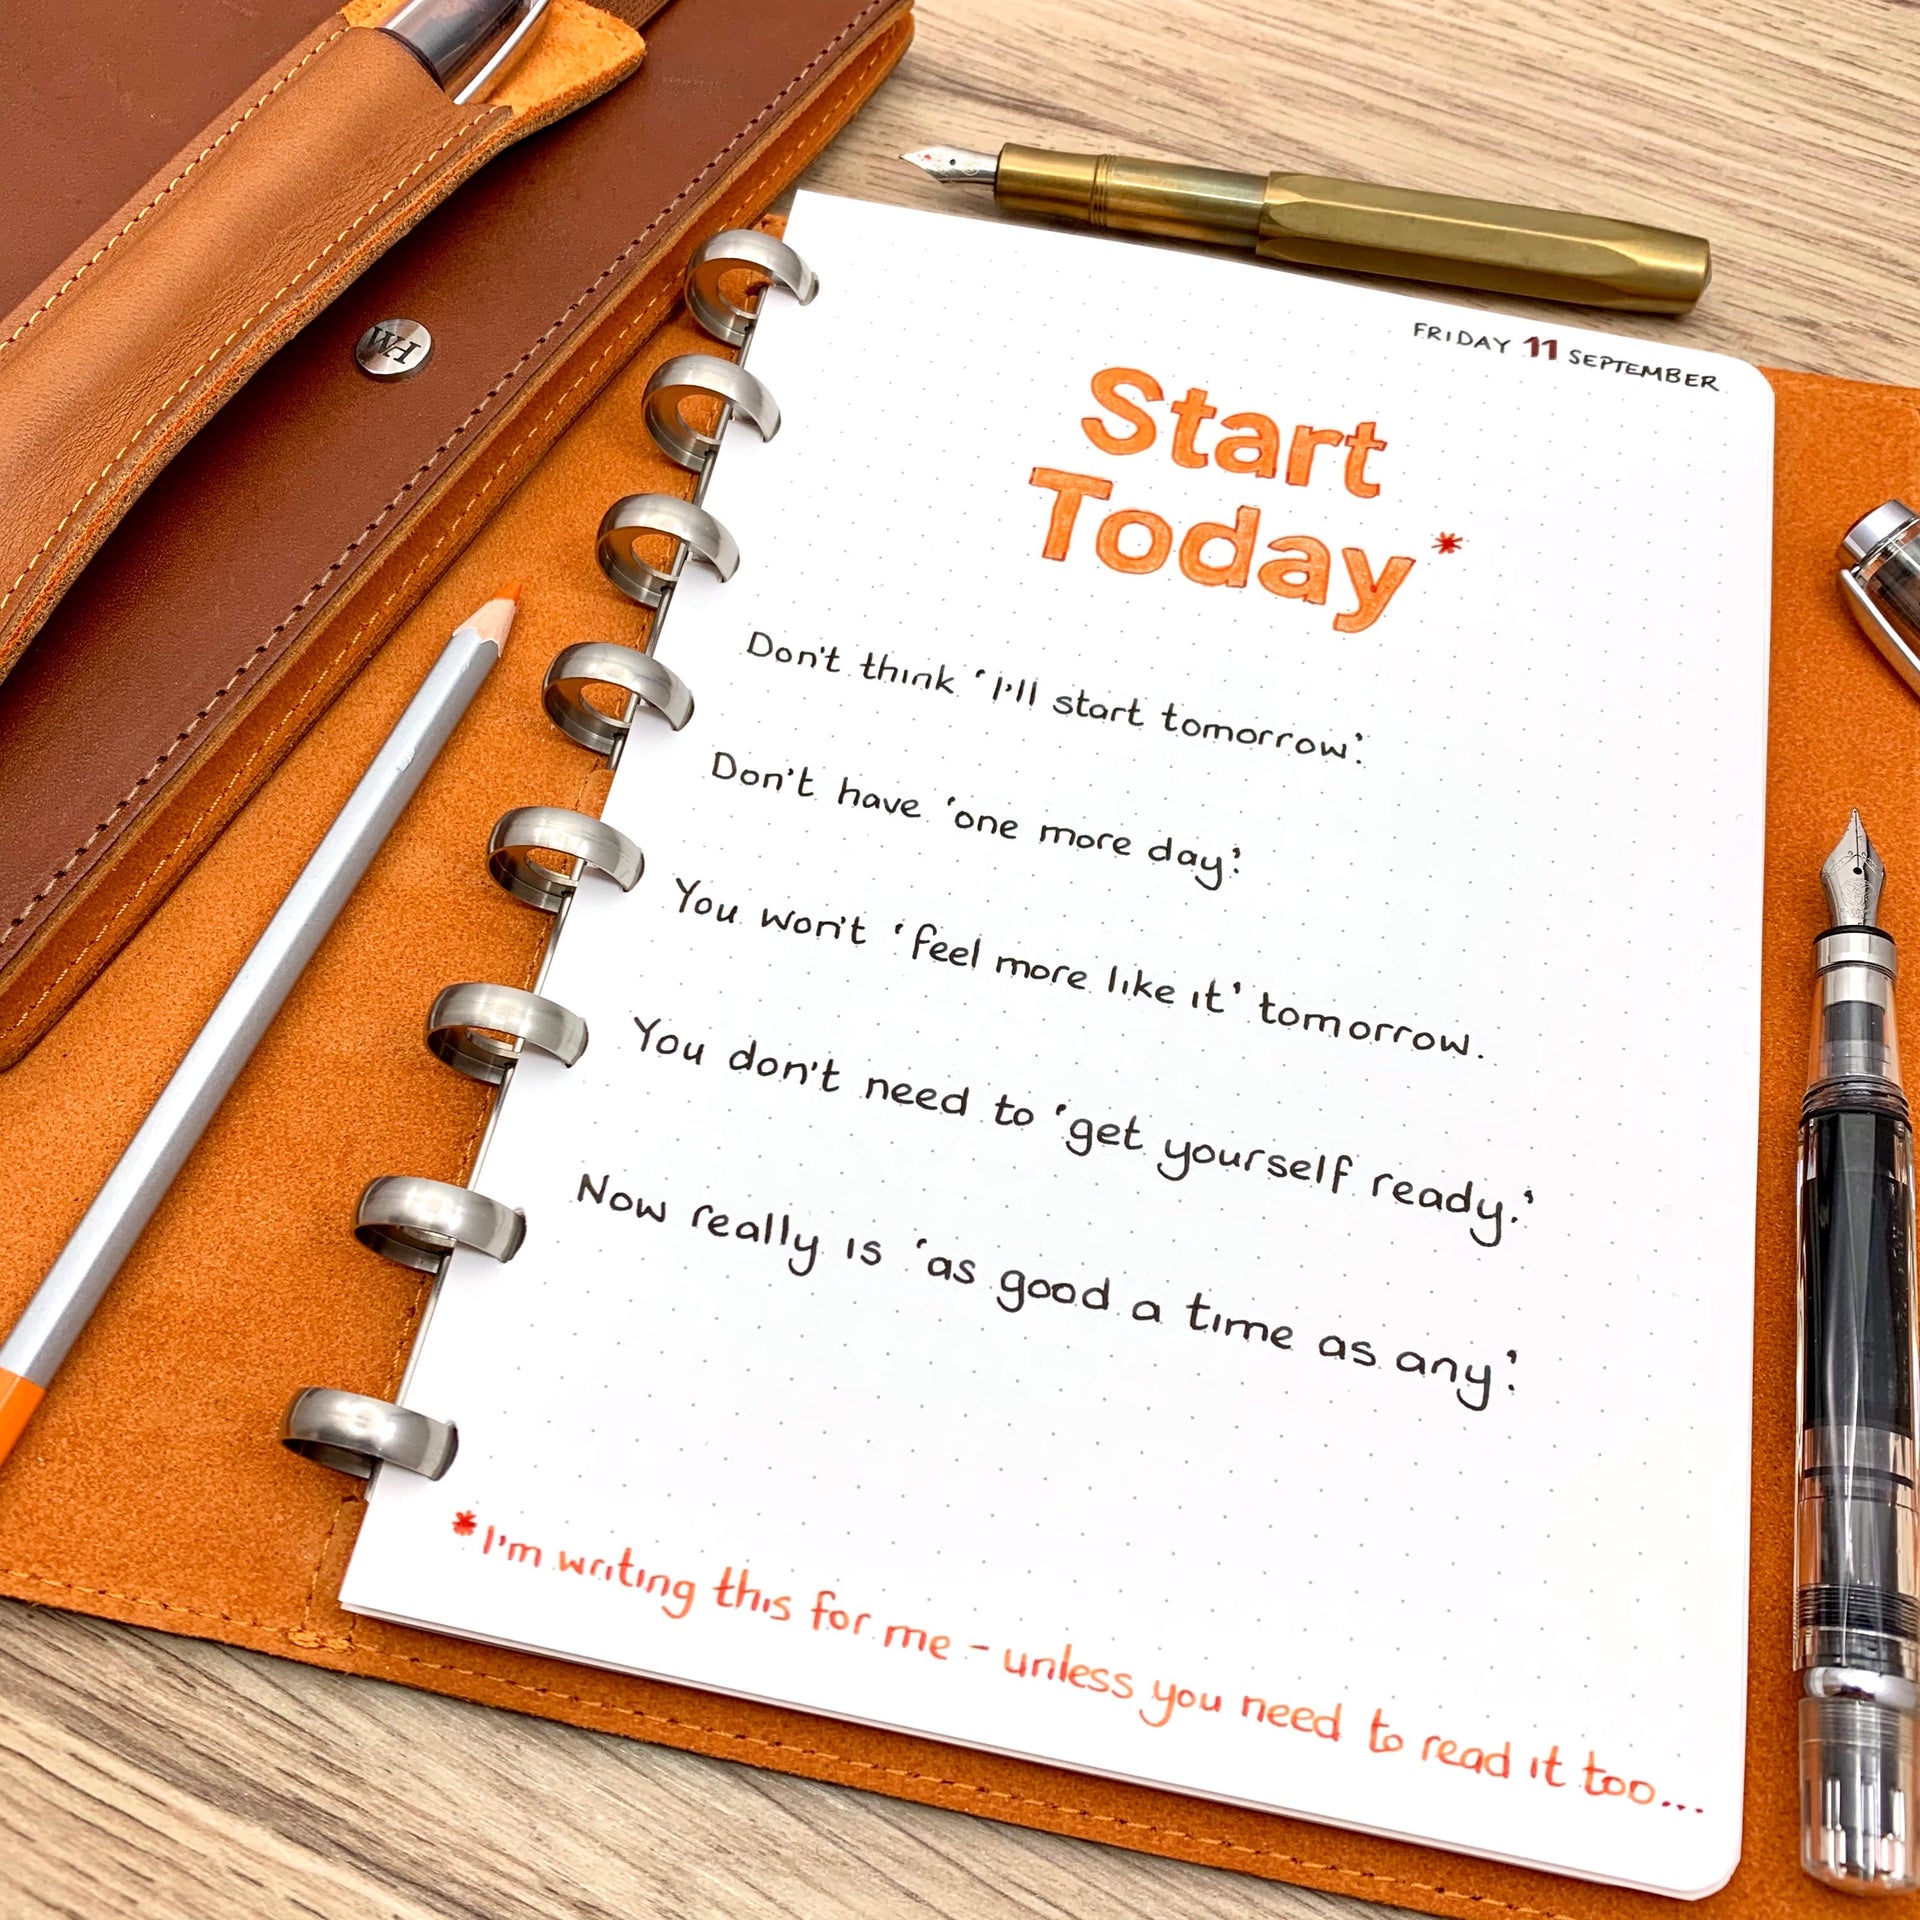 Start Today*